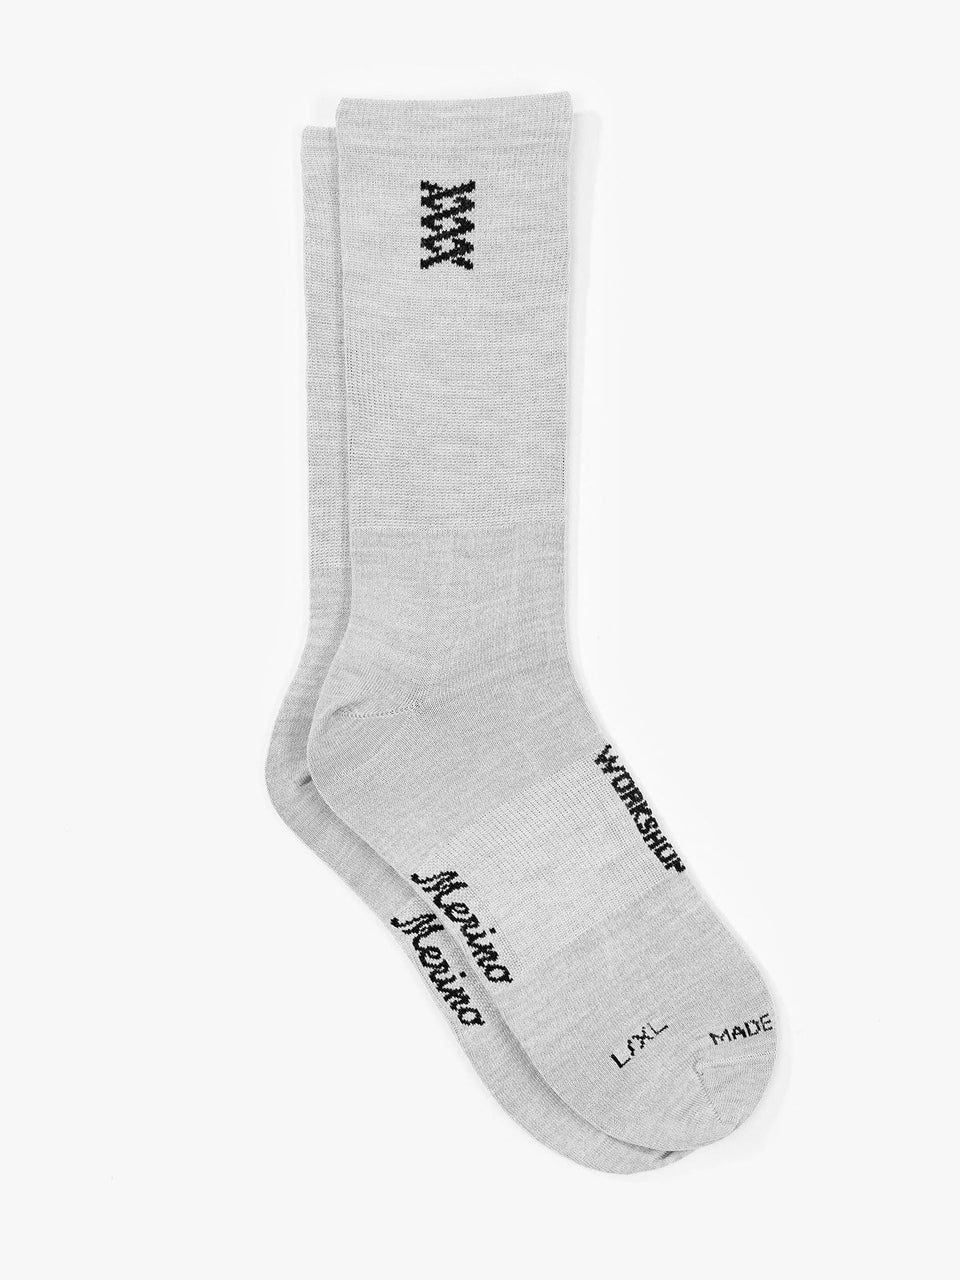 Mission Pro Wool Blend Socks